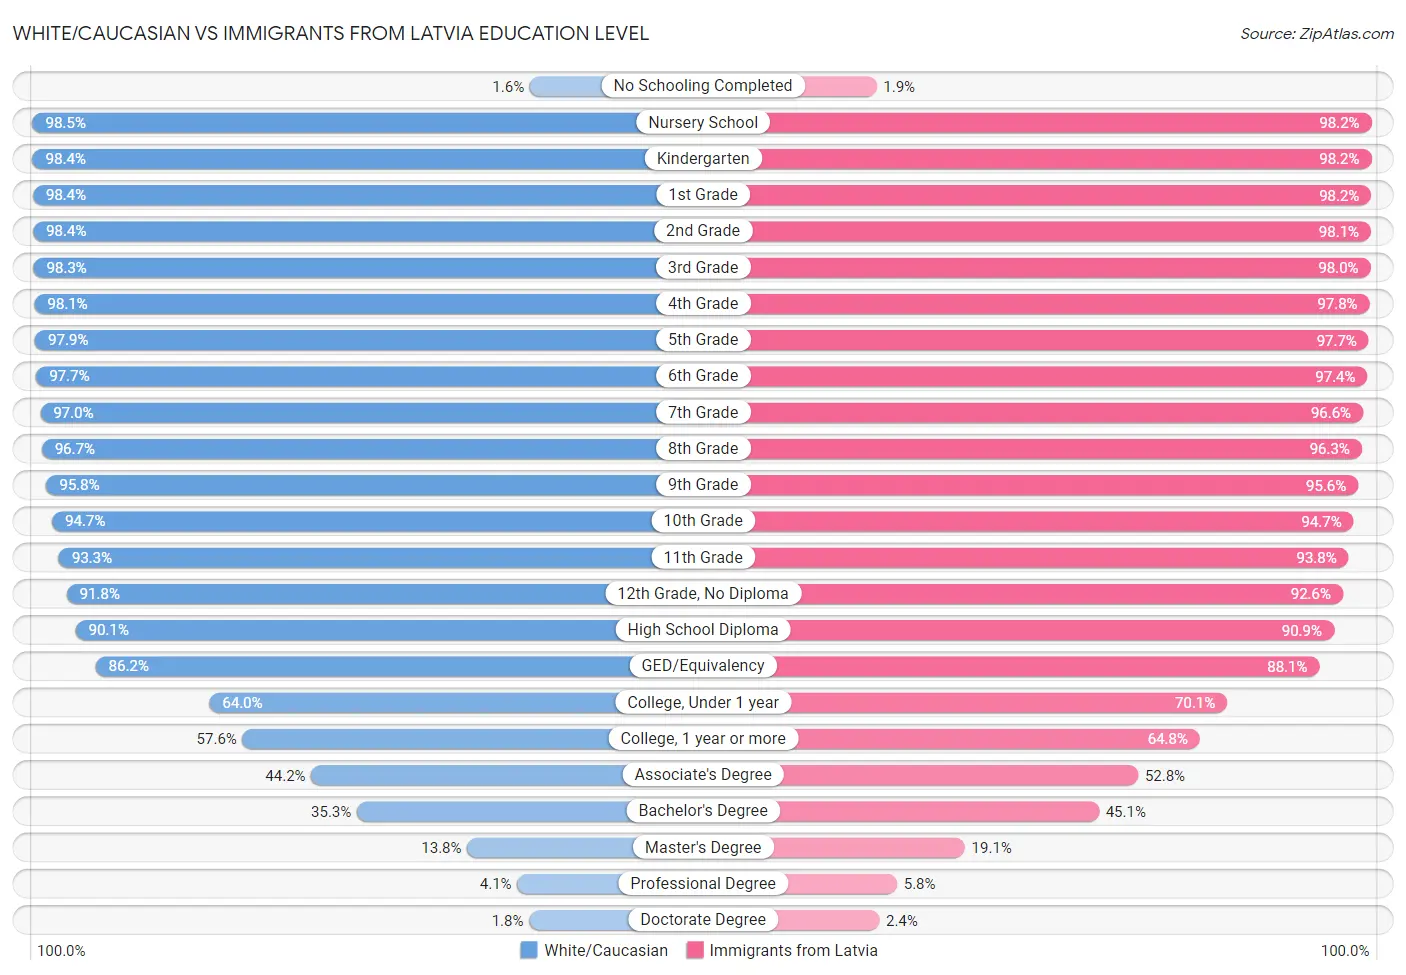 White/Caucasian vs Immigrants from Latvia Education Level